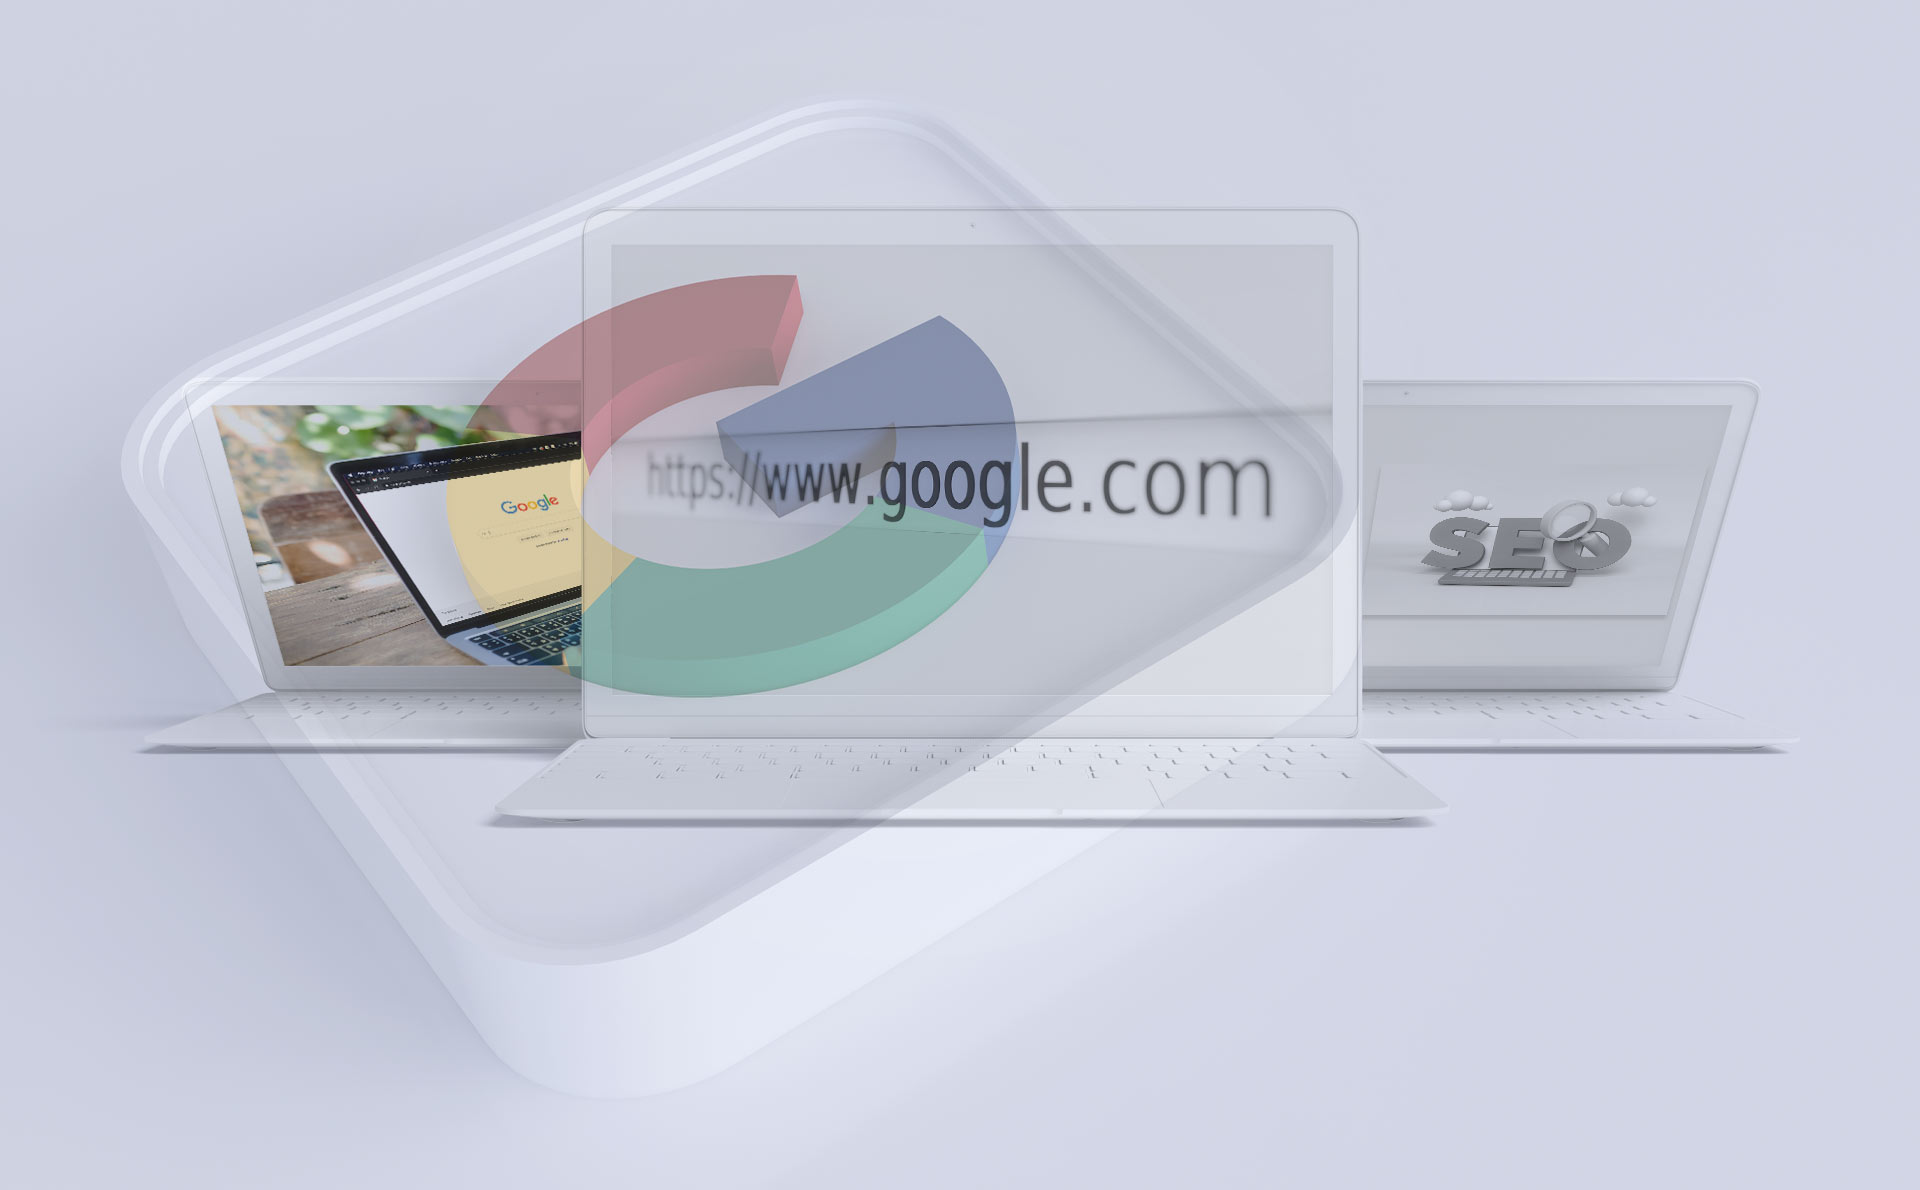 Google logo i natpis "SEO" na monitoru računara.